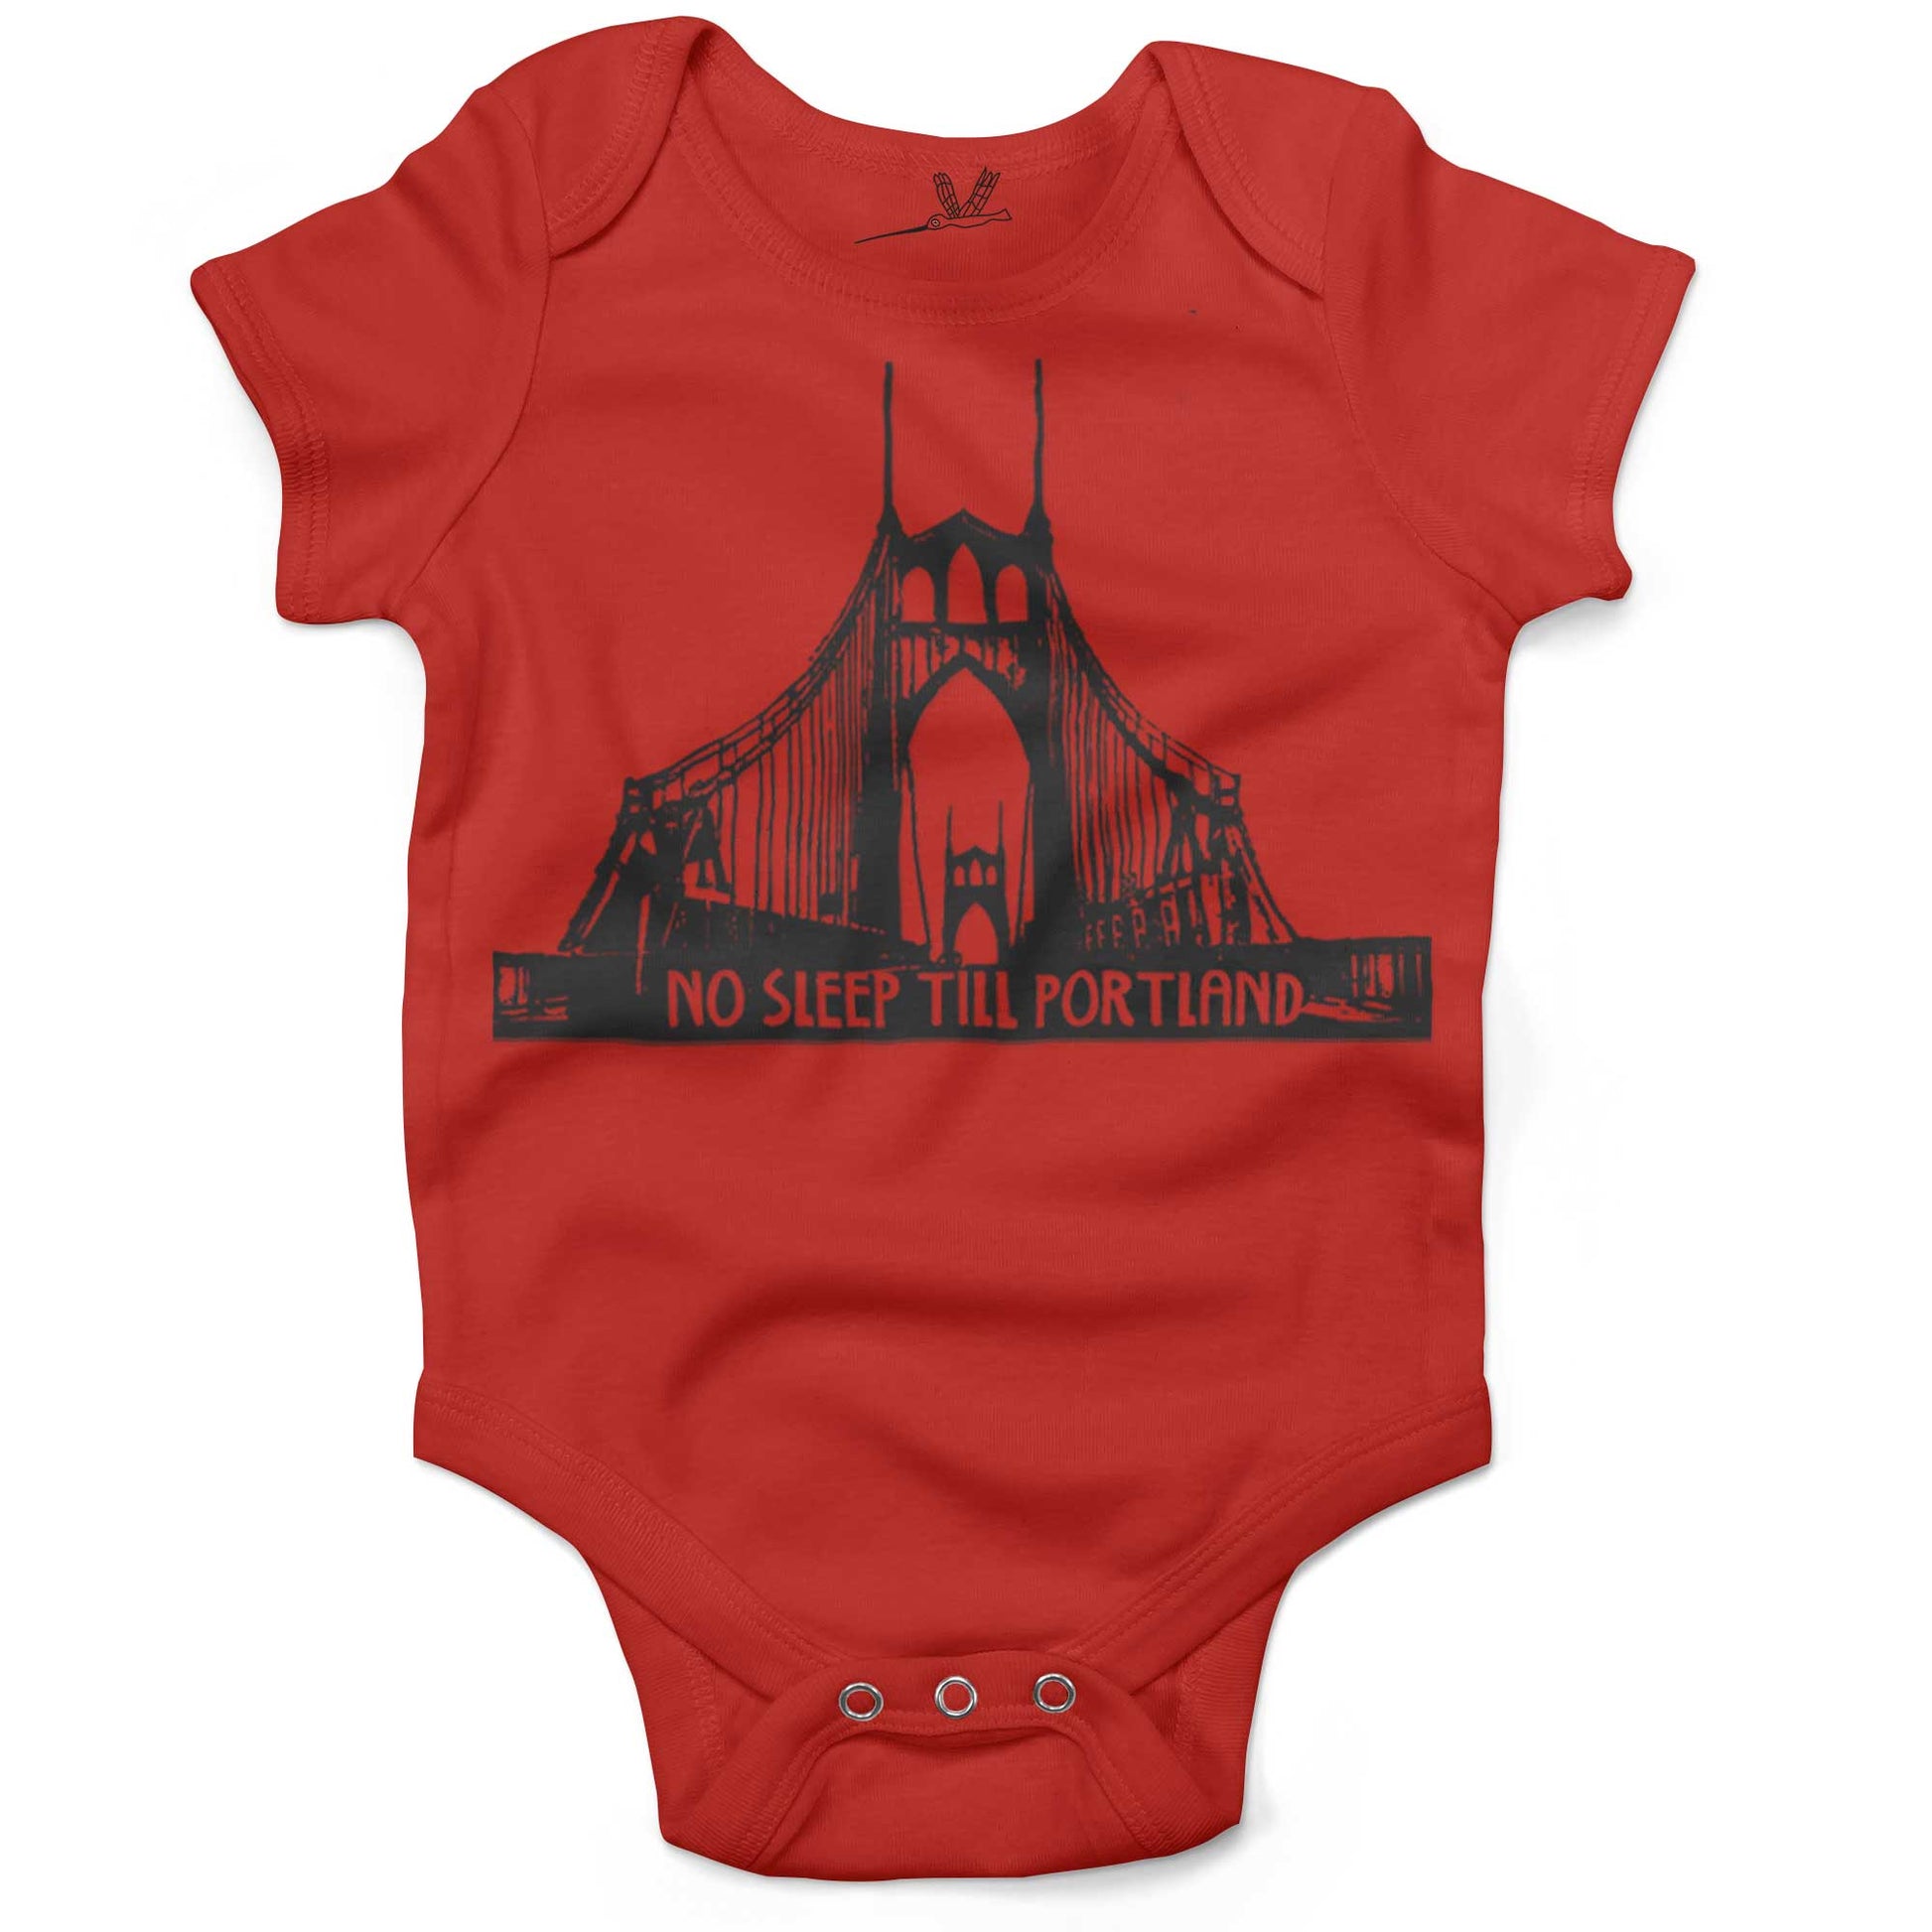 No Sleep Till Portland Infant Bodysuit or Raglan Baby Tee-Organic Red-3-6 months